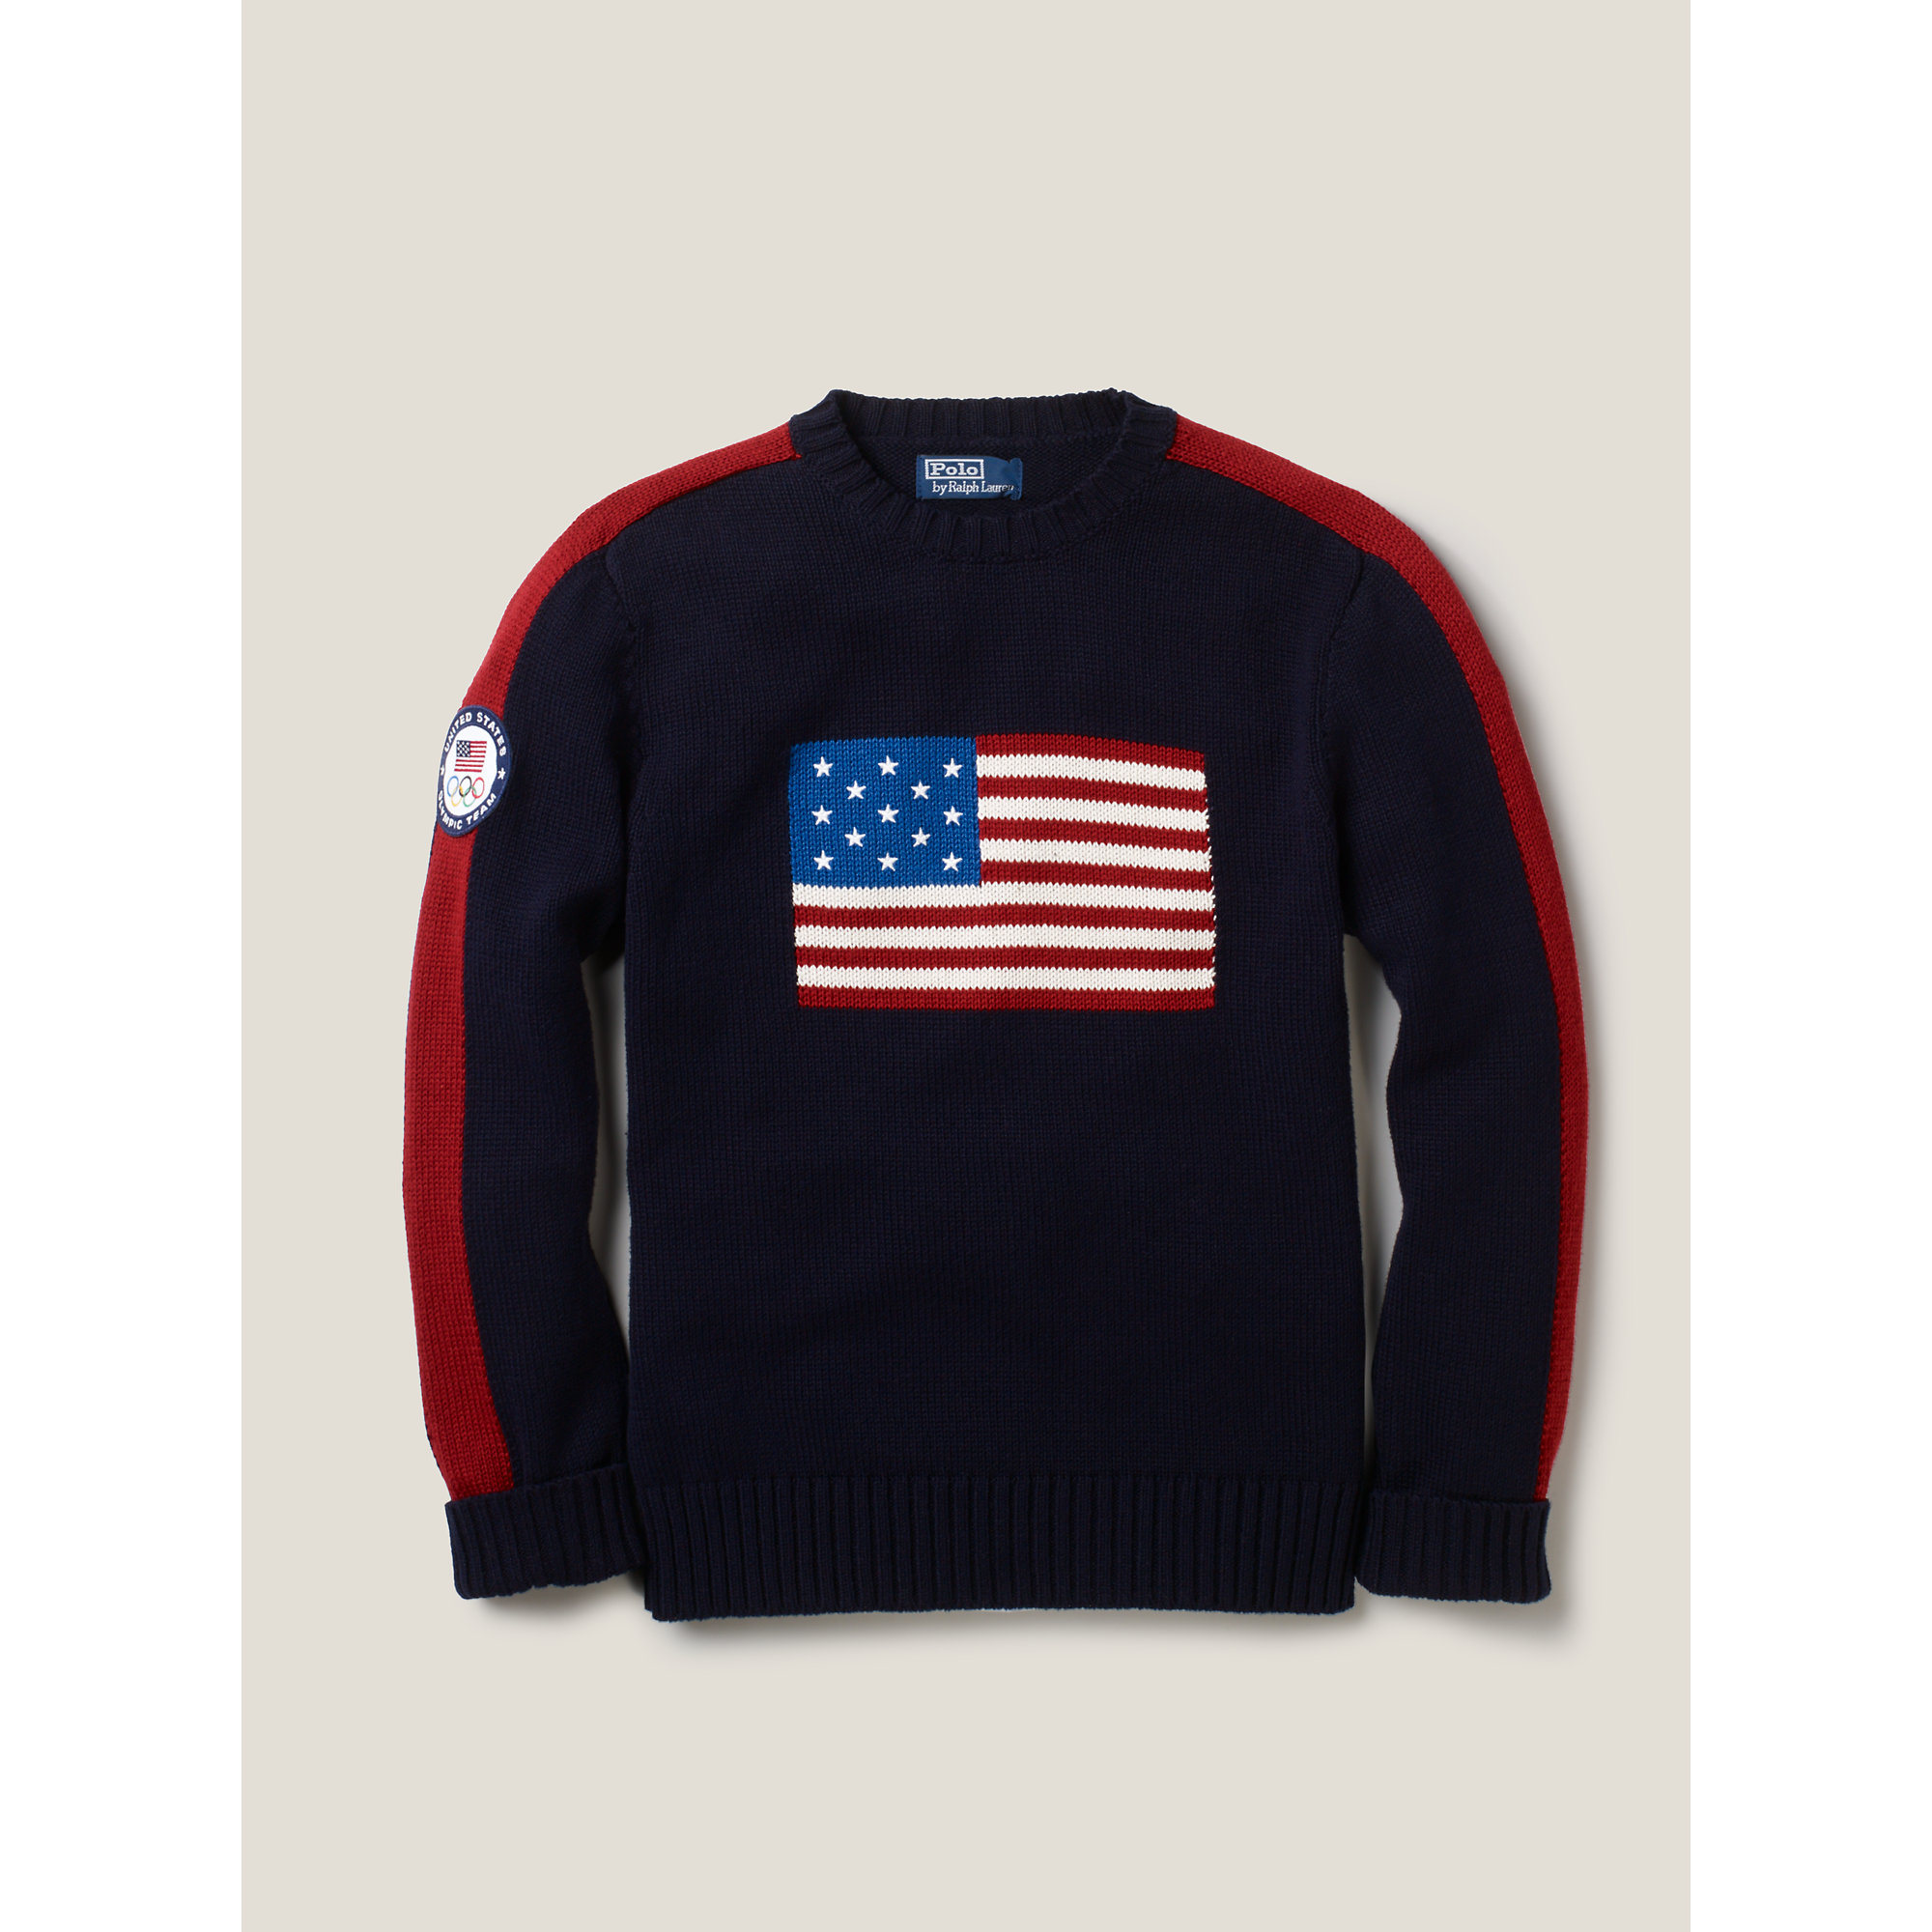 Polo Ralph Lauren Team Usa Crewneck Flag Sweater in Blue for Men - Lyst